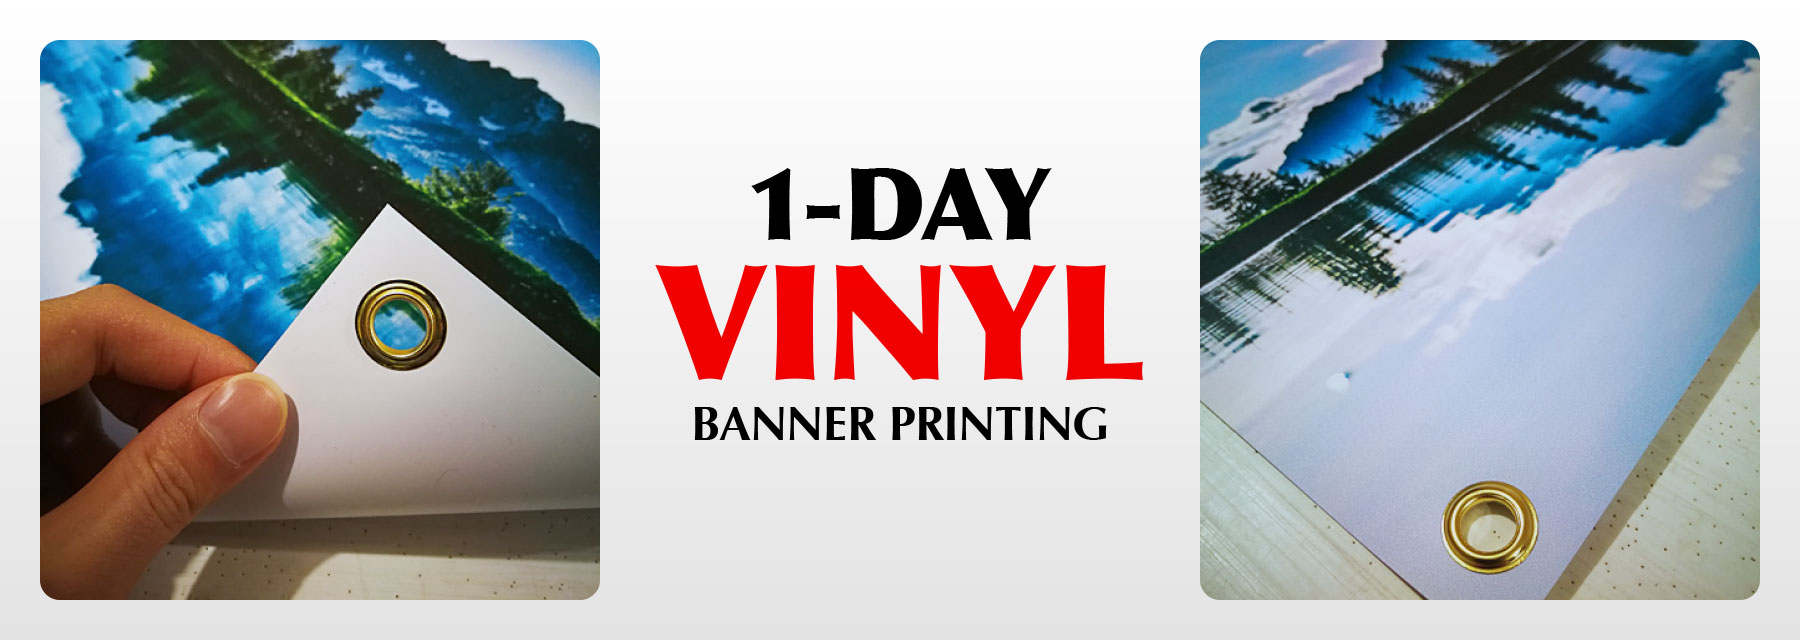 Custom vinyl banner printing 1-day rush service